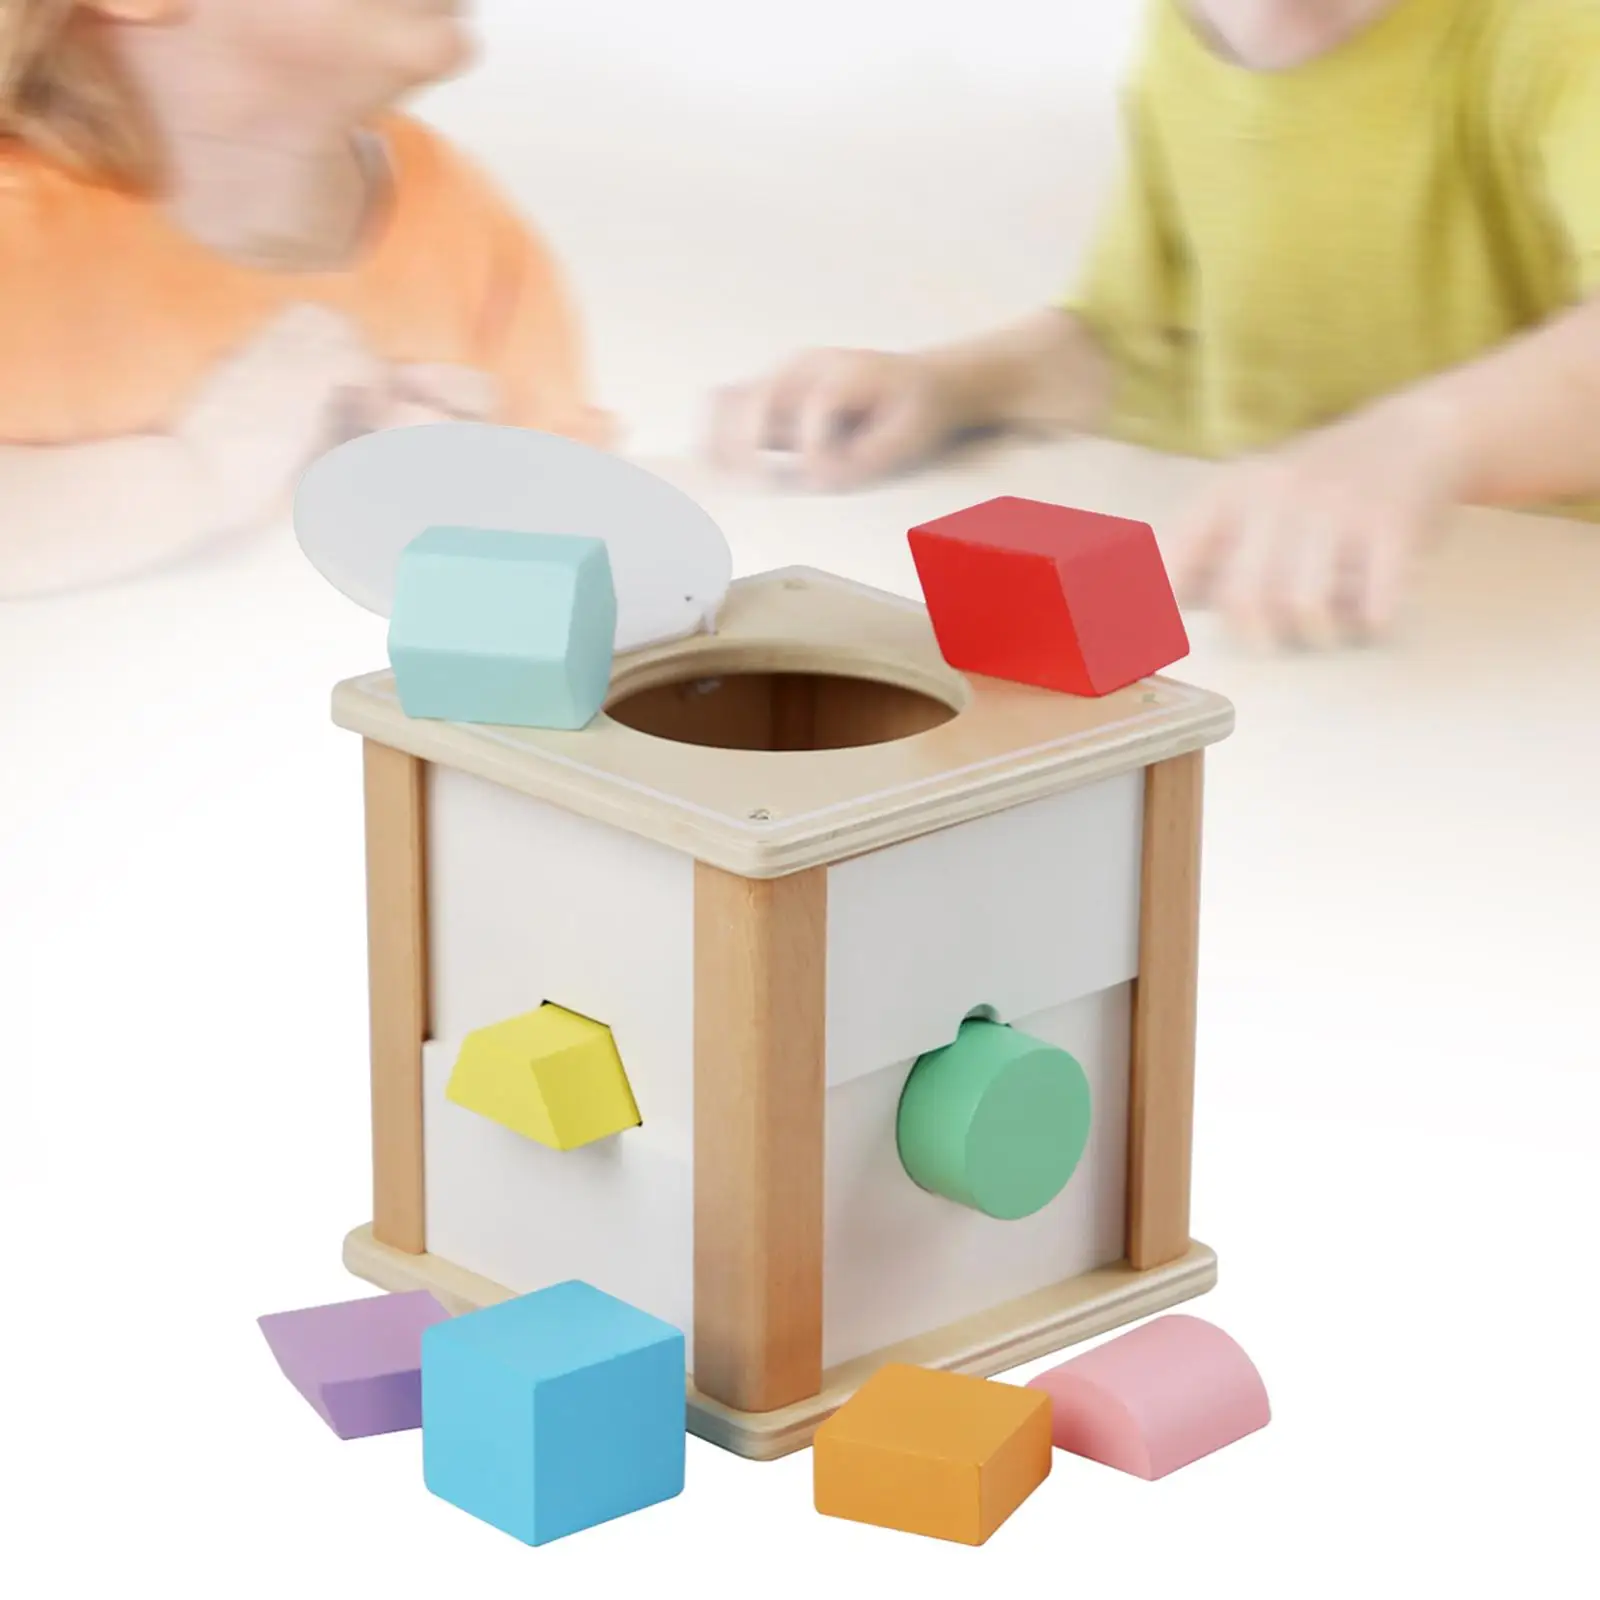 In 1 play montessori box toy matching montessori shape block for game activity birthday thumb200